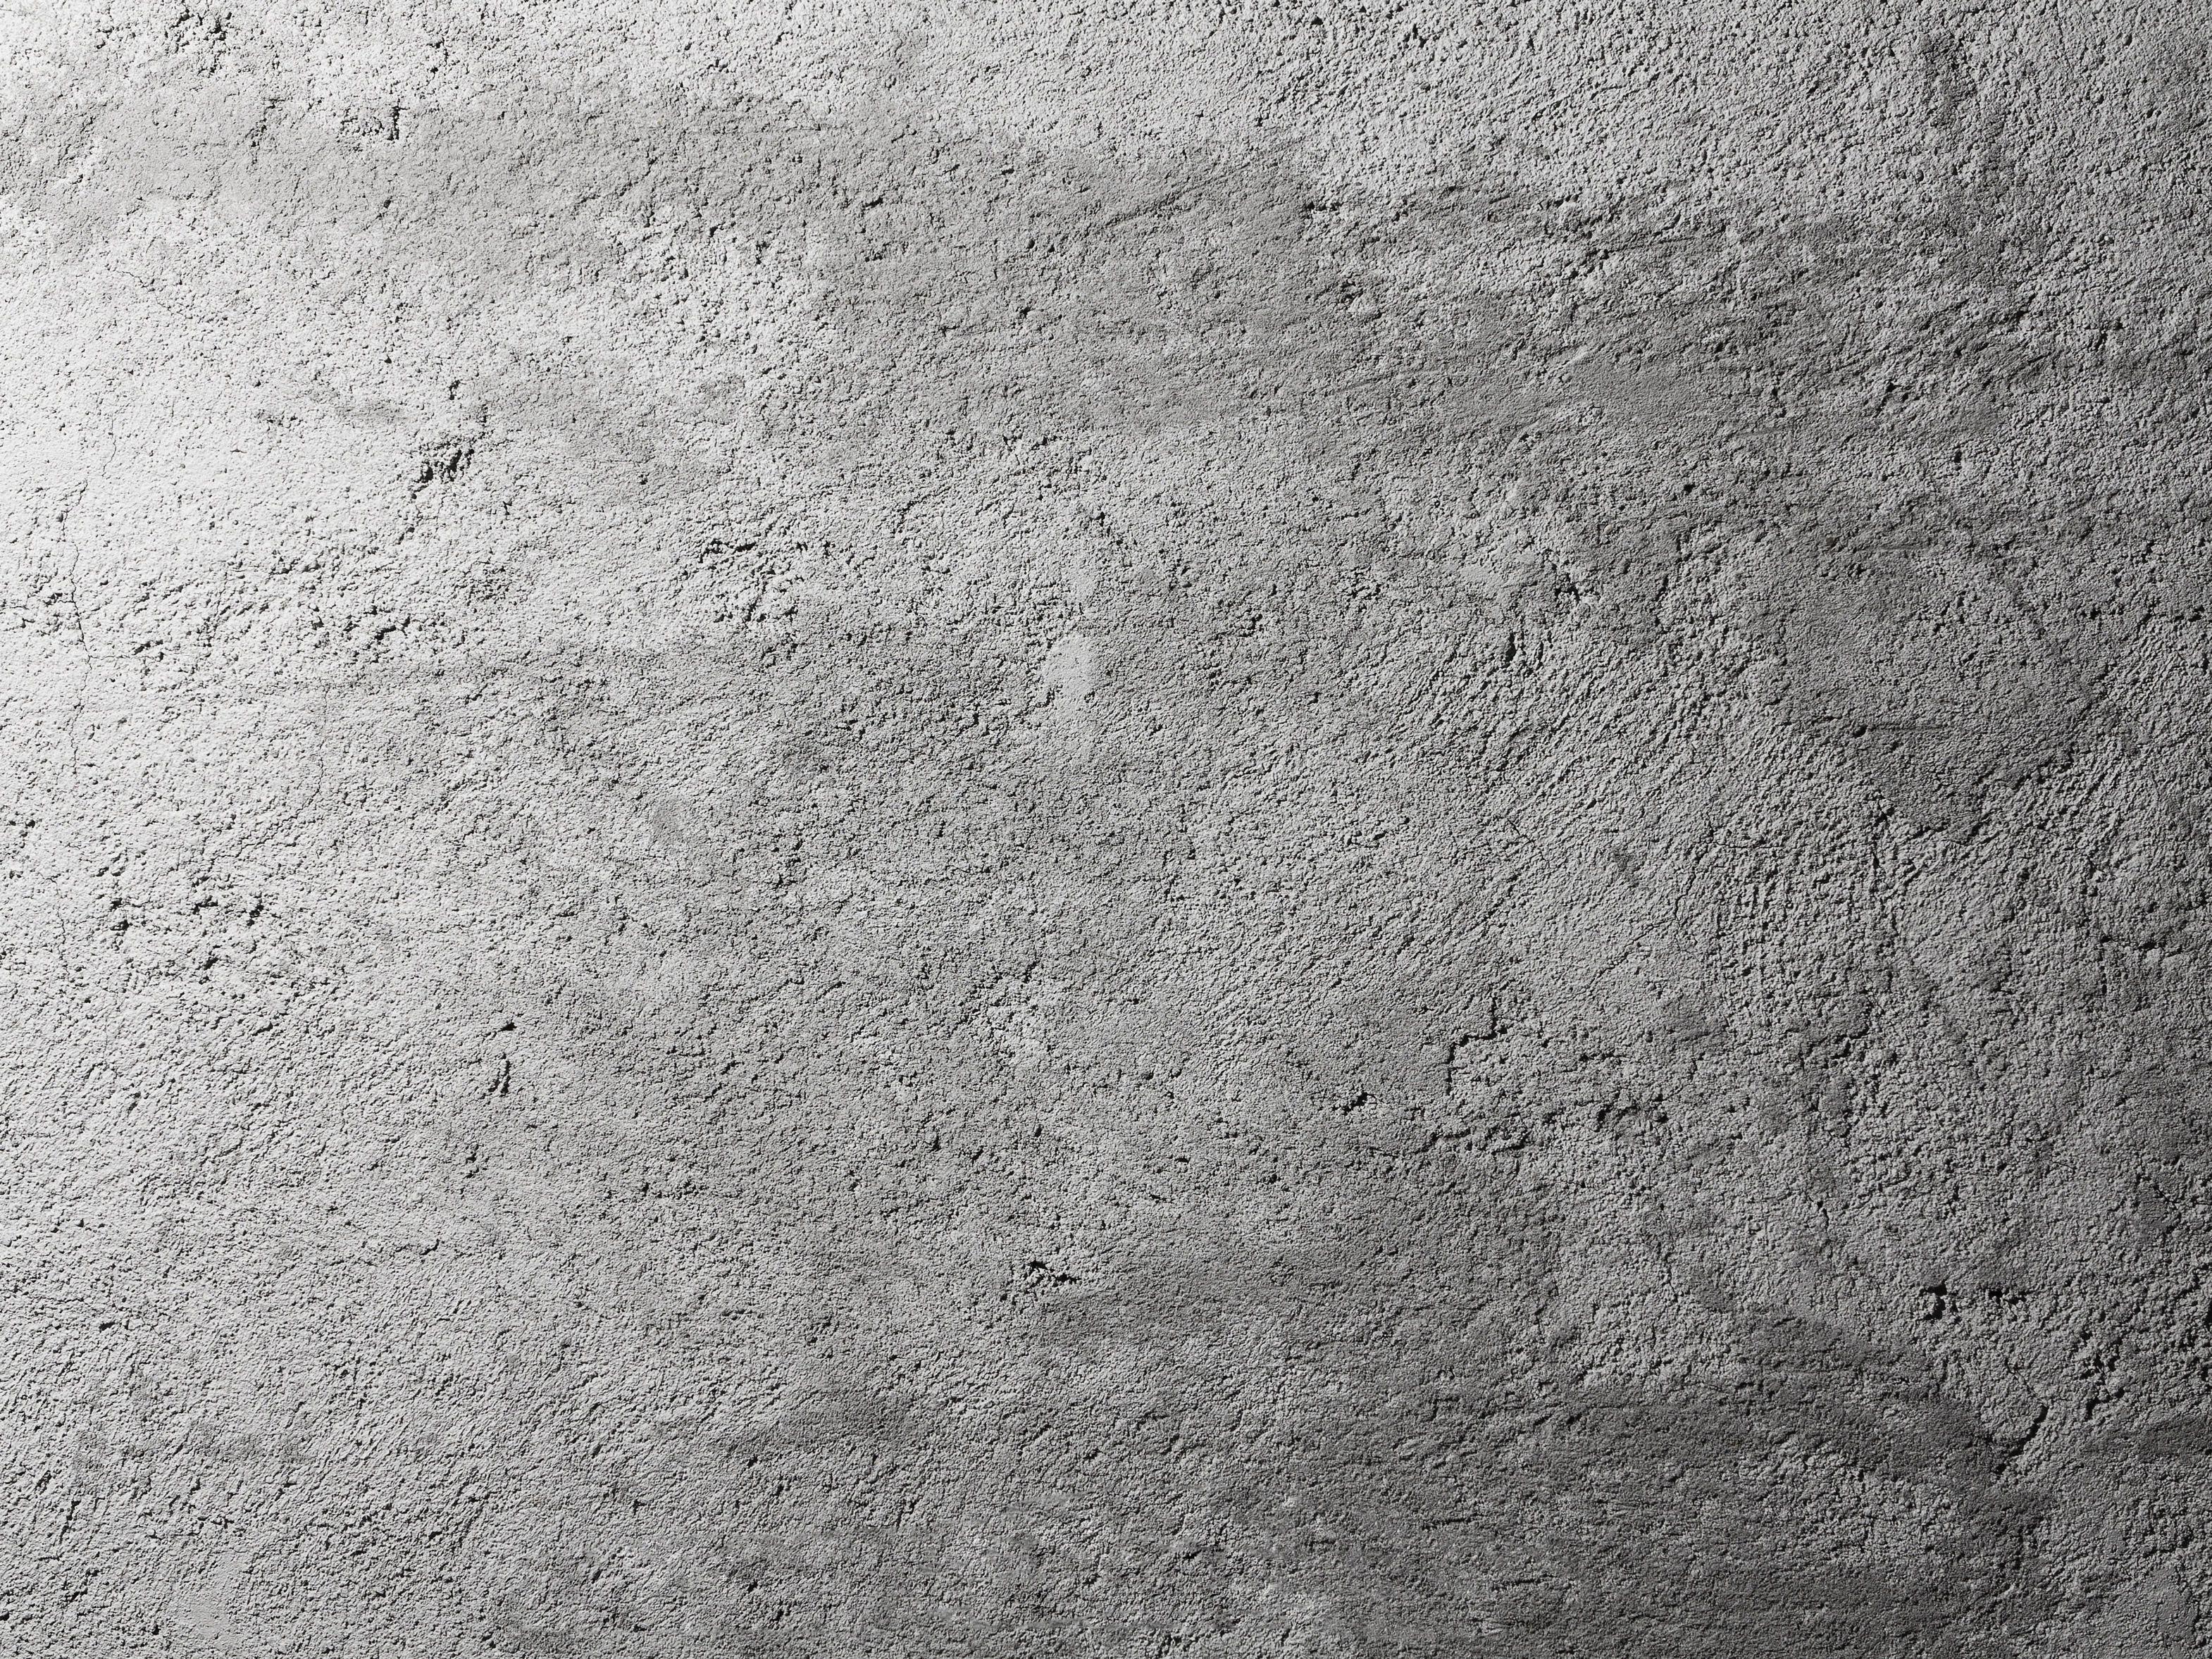 100 Concrete Texture Pictures HD  Download Free Images on Unsplash